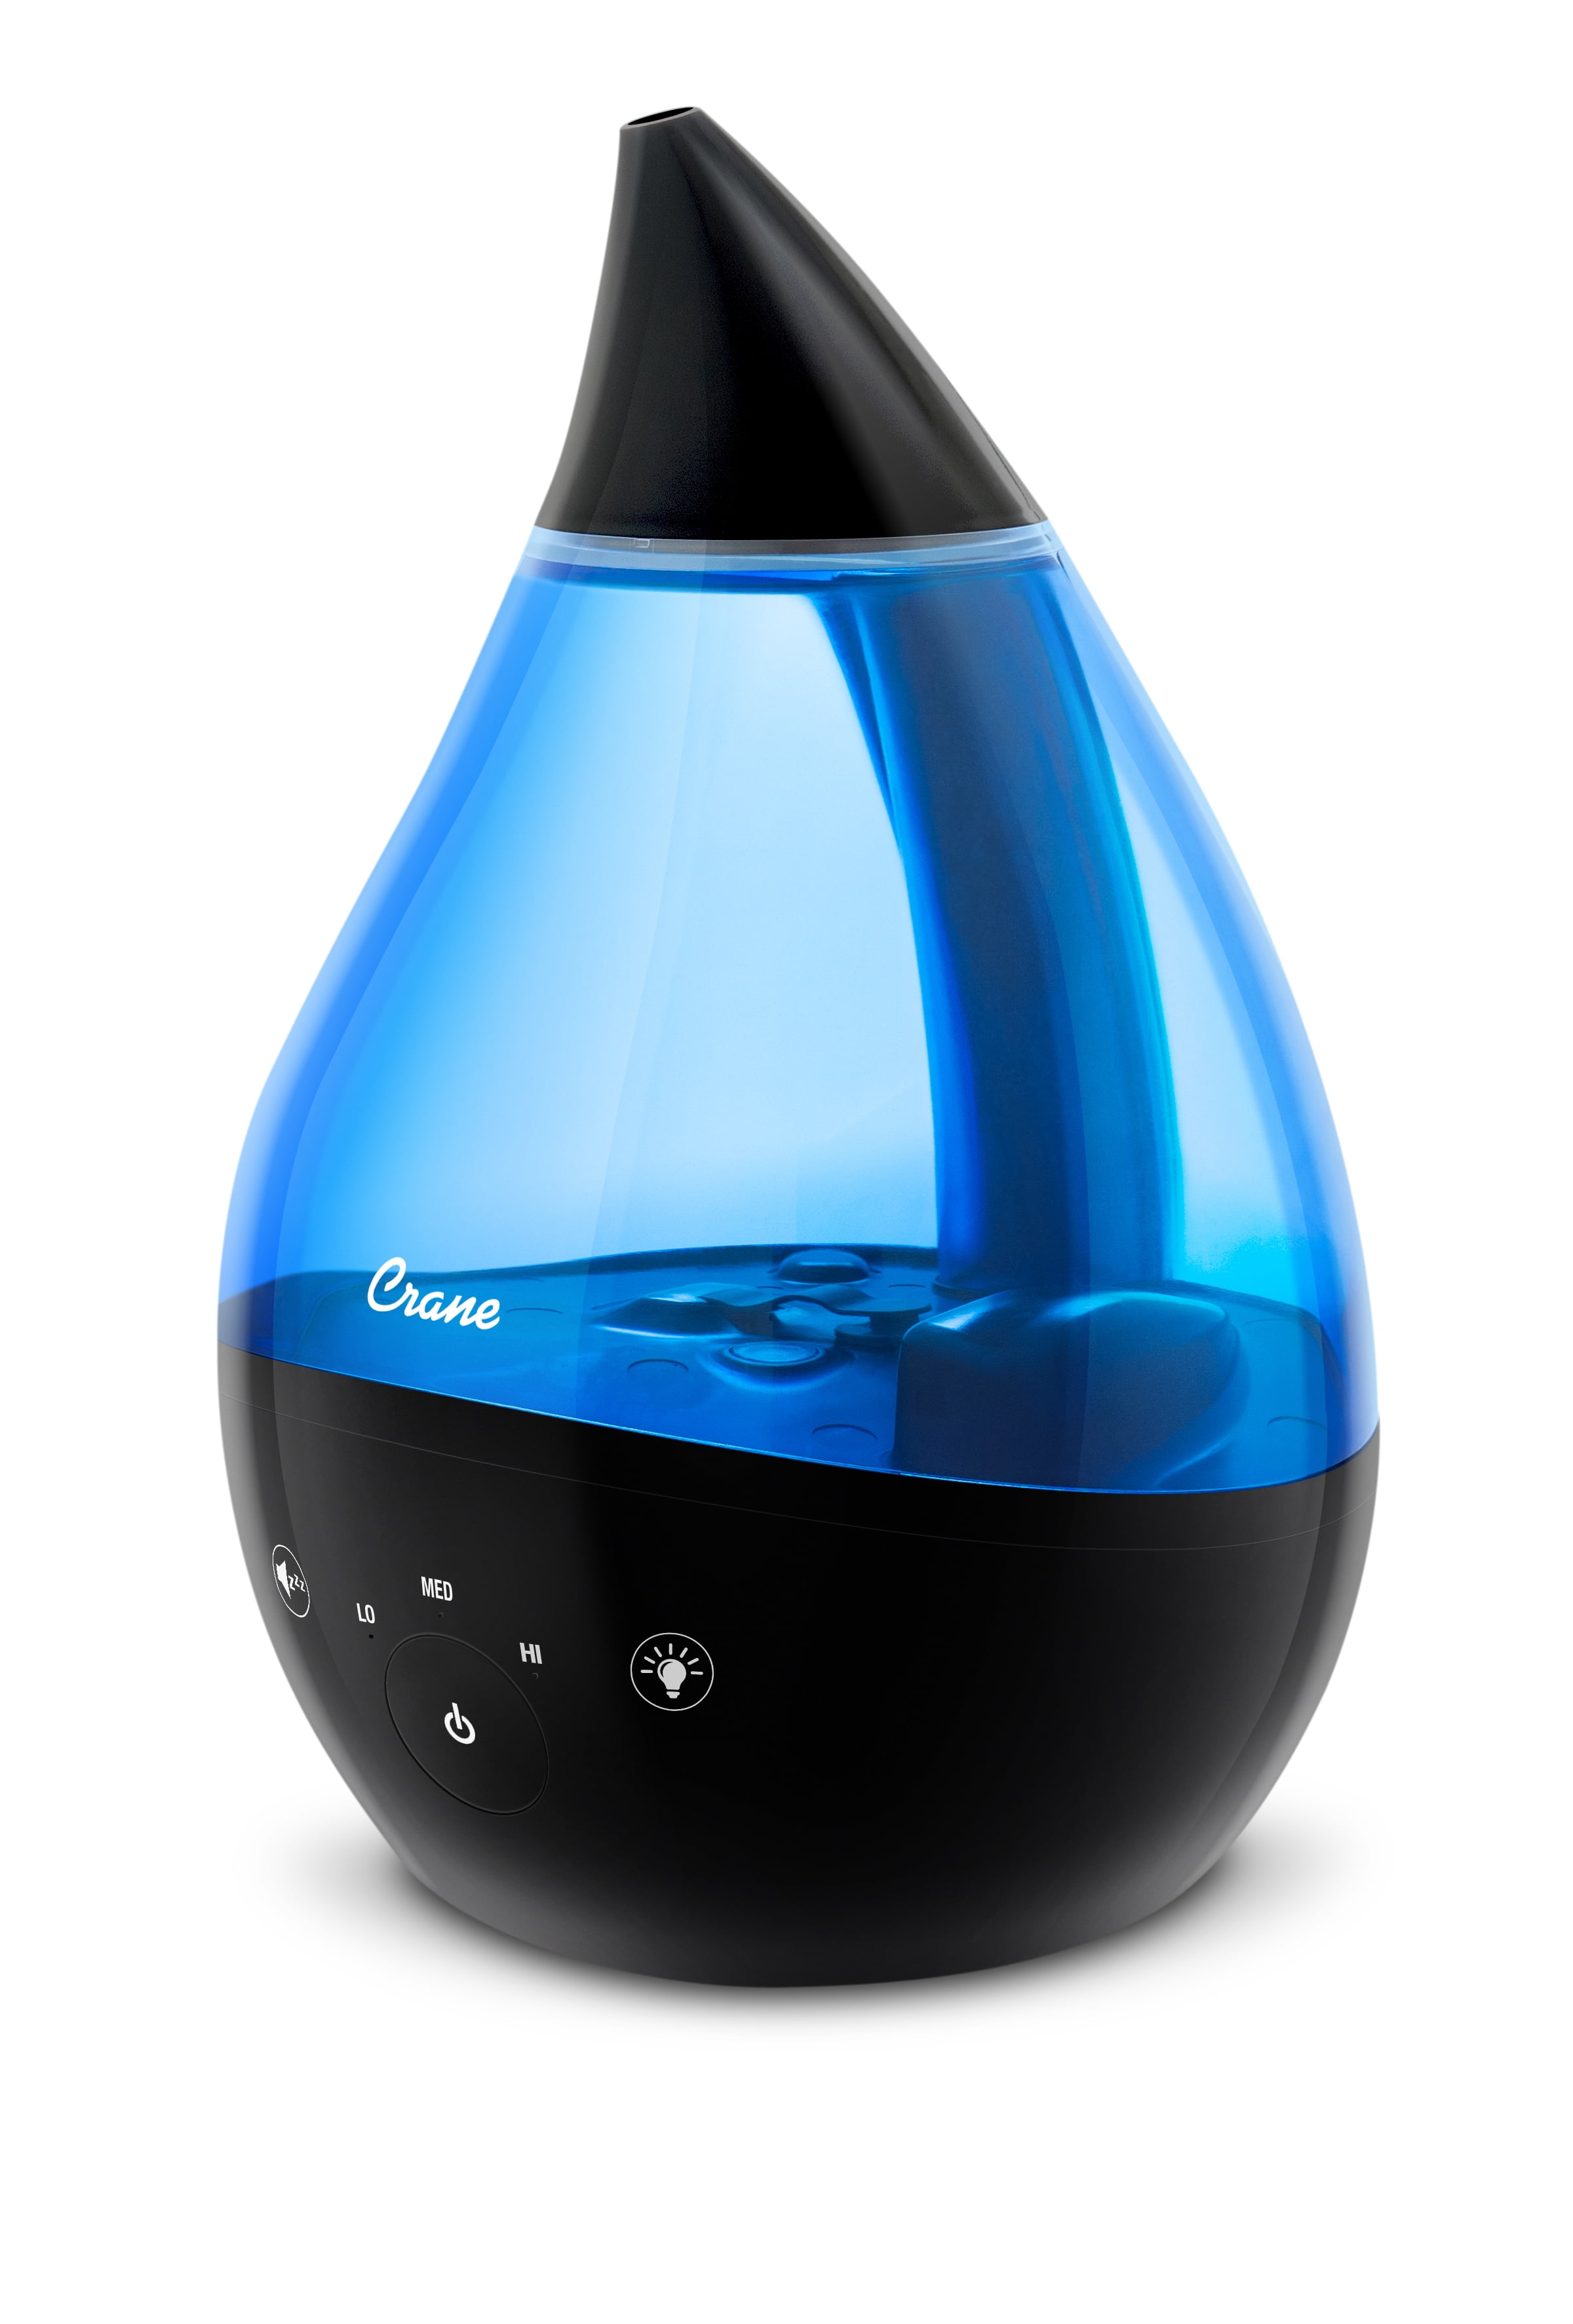 Crane USA Top Fill Drop 1 Gallon Ultrasonic Cool Mist Humidifier with 24 Hour Run Time Black & Blue